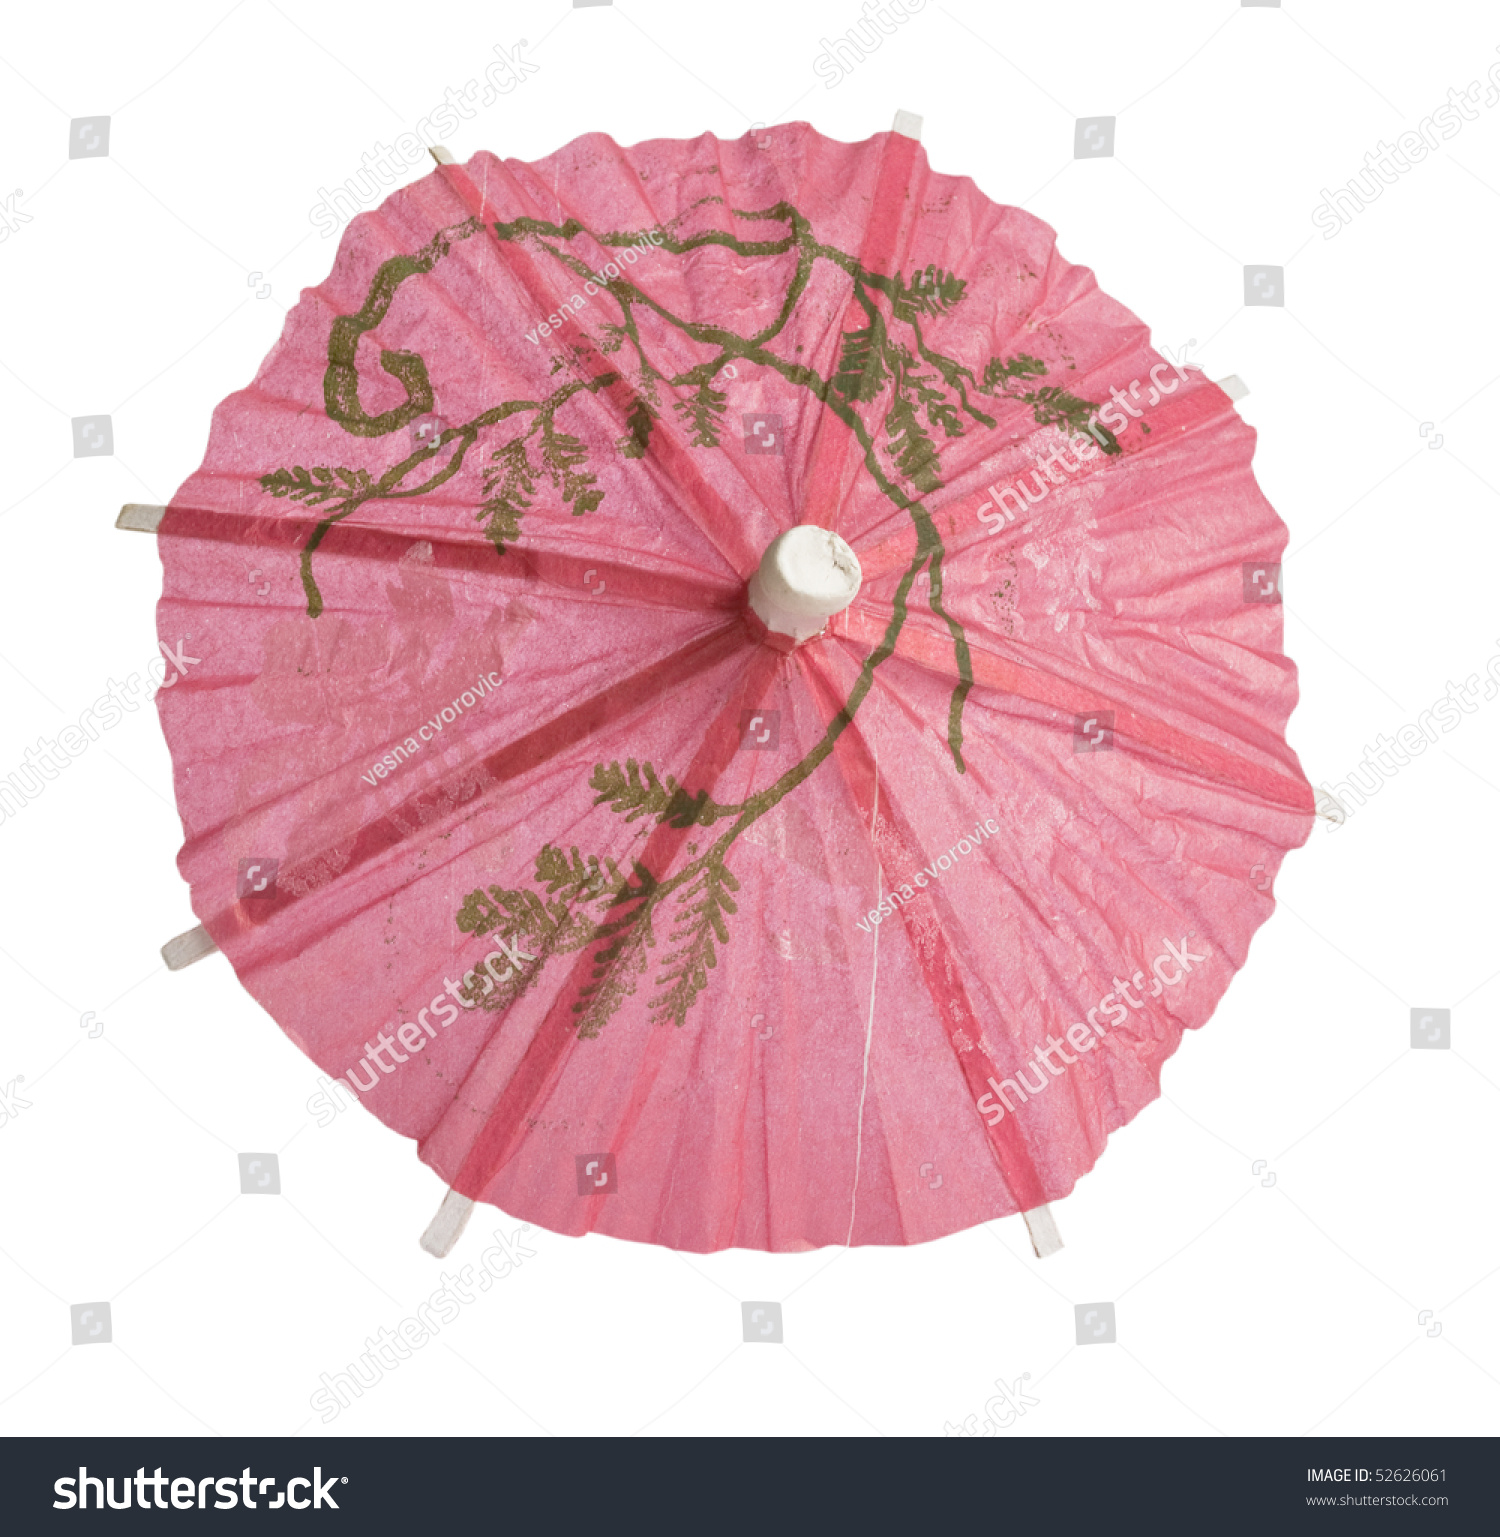 Pink Cocktail Umbrella Stock Photo 52626061 - Shutterstock